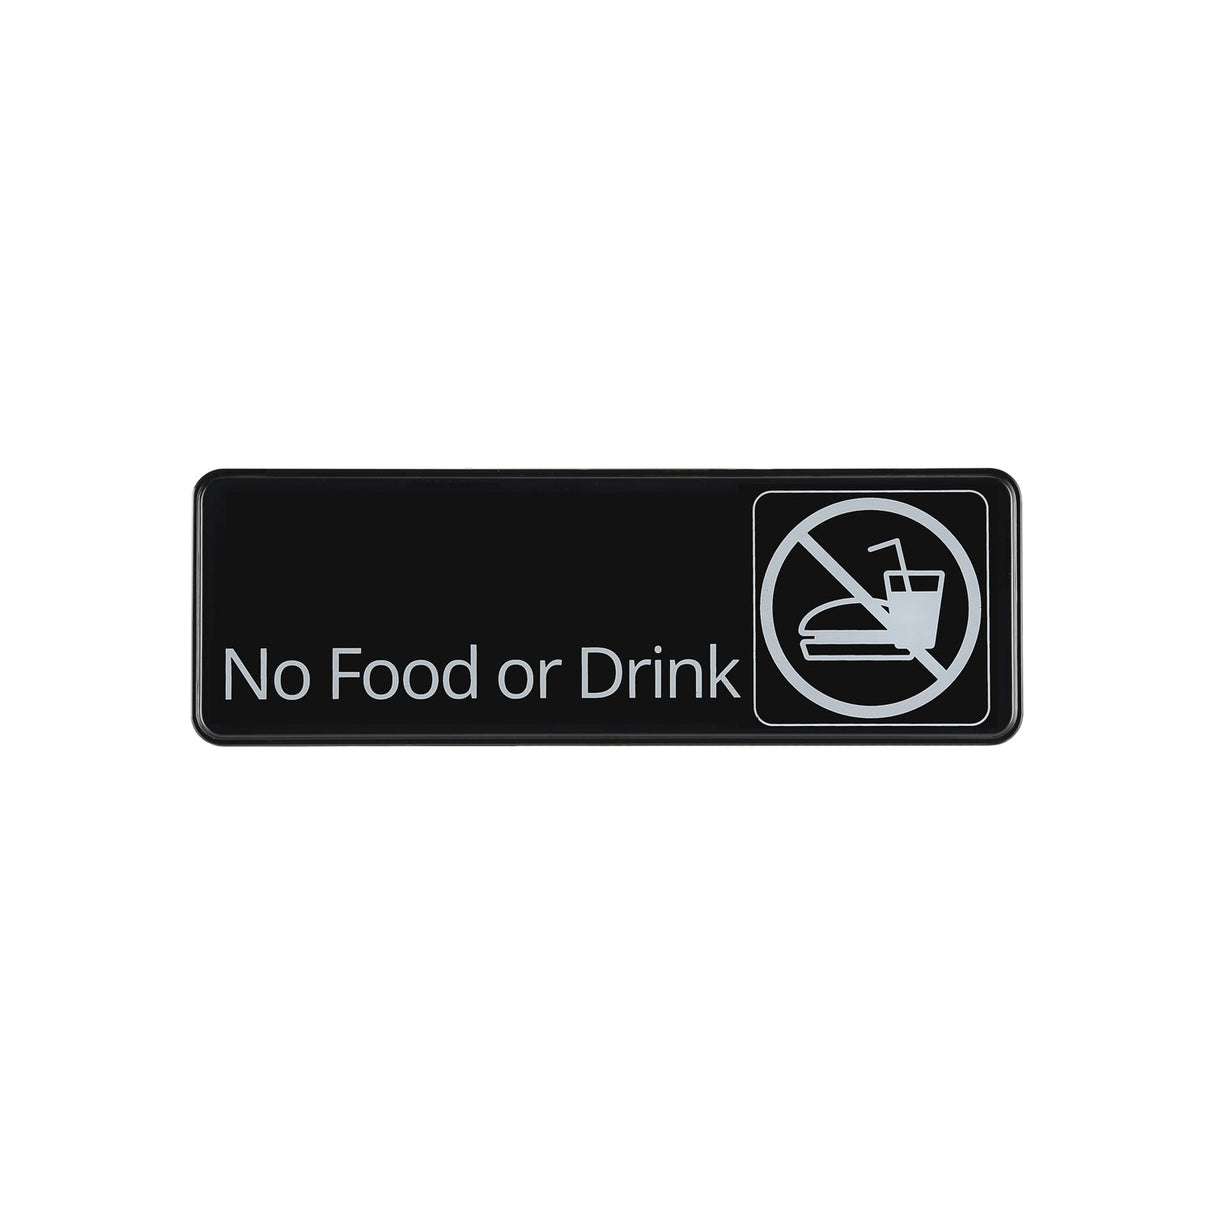 Sign Compliance EN No Food or Drink 9x3"H